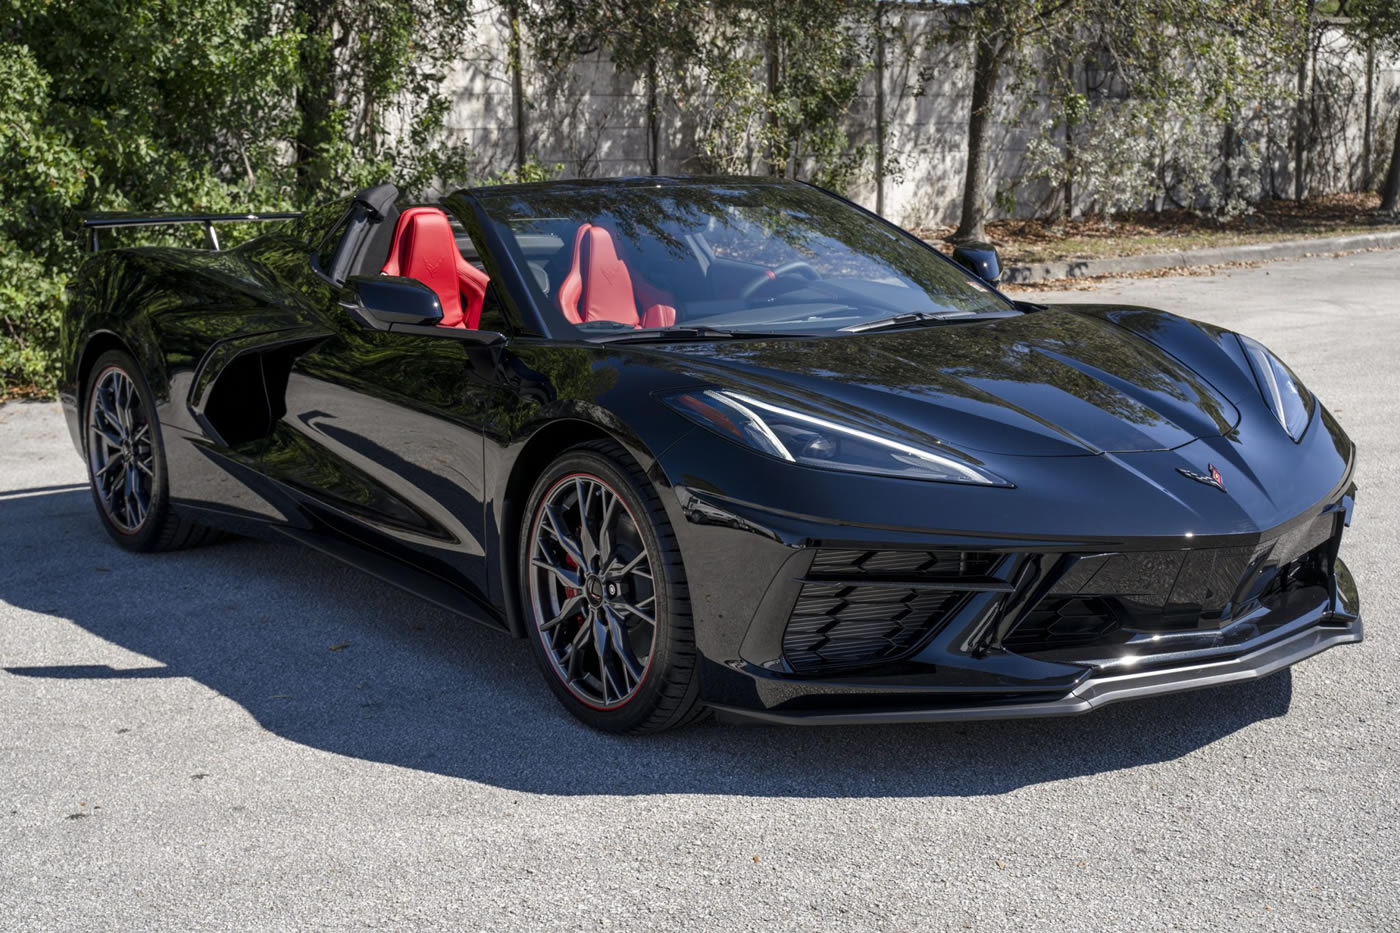 2023 Corvette Stingray Convertible 1LT in Black